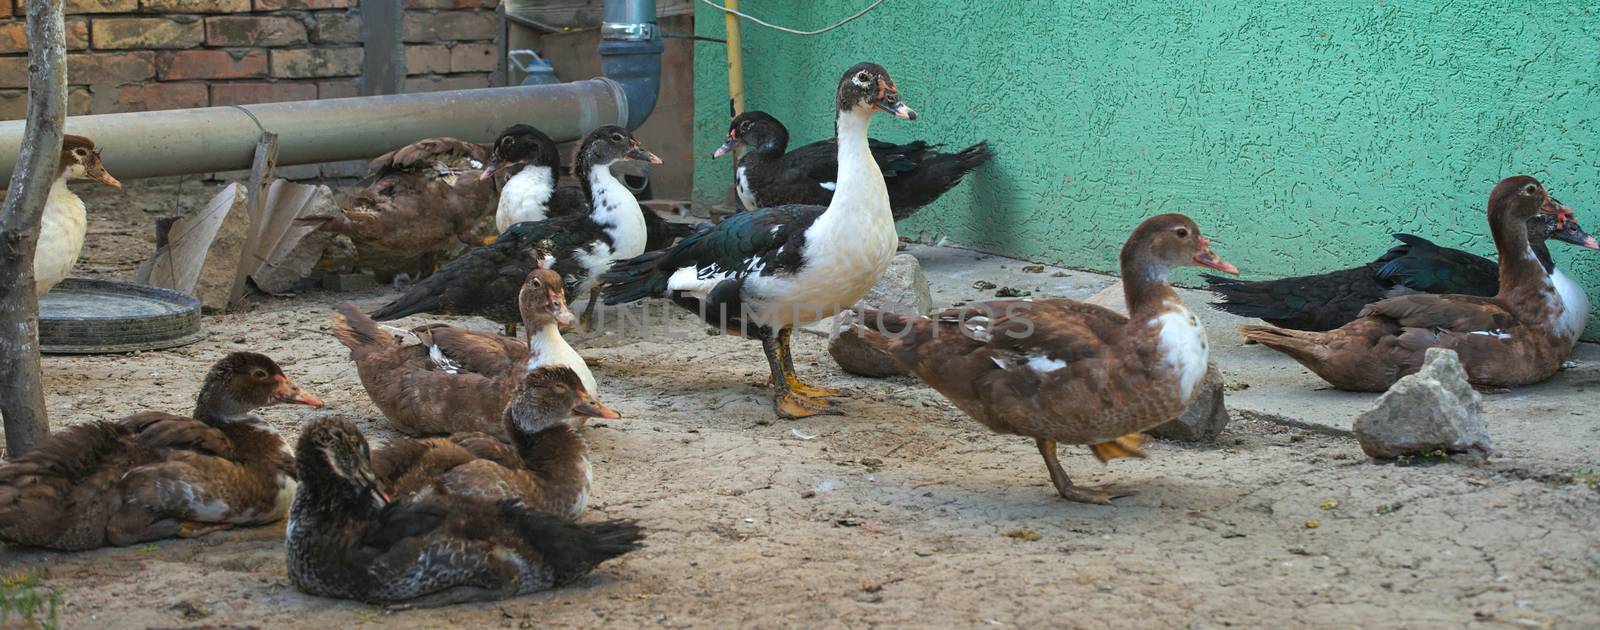 Flock of young ducks having fun in backyard by sheriffkule